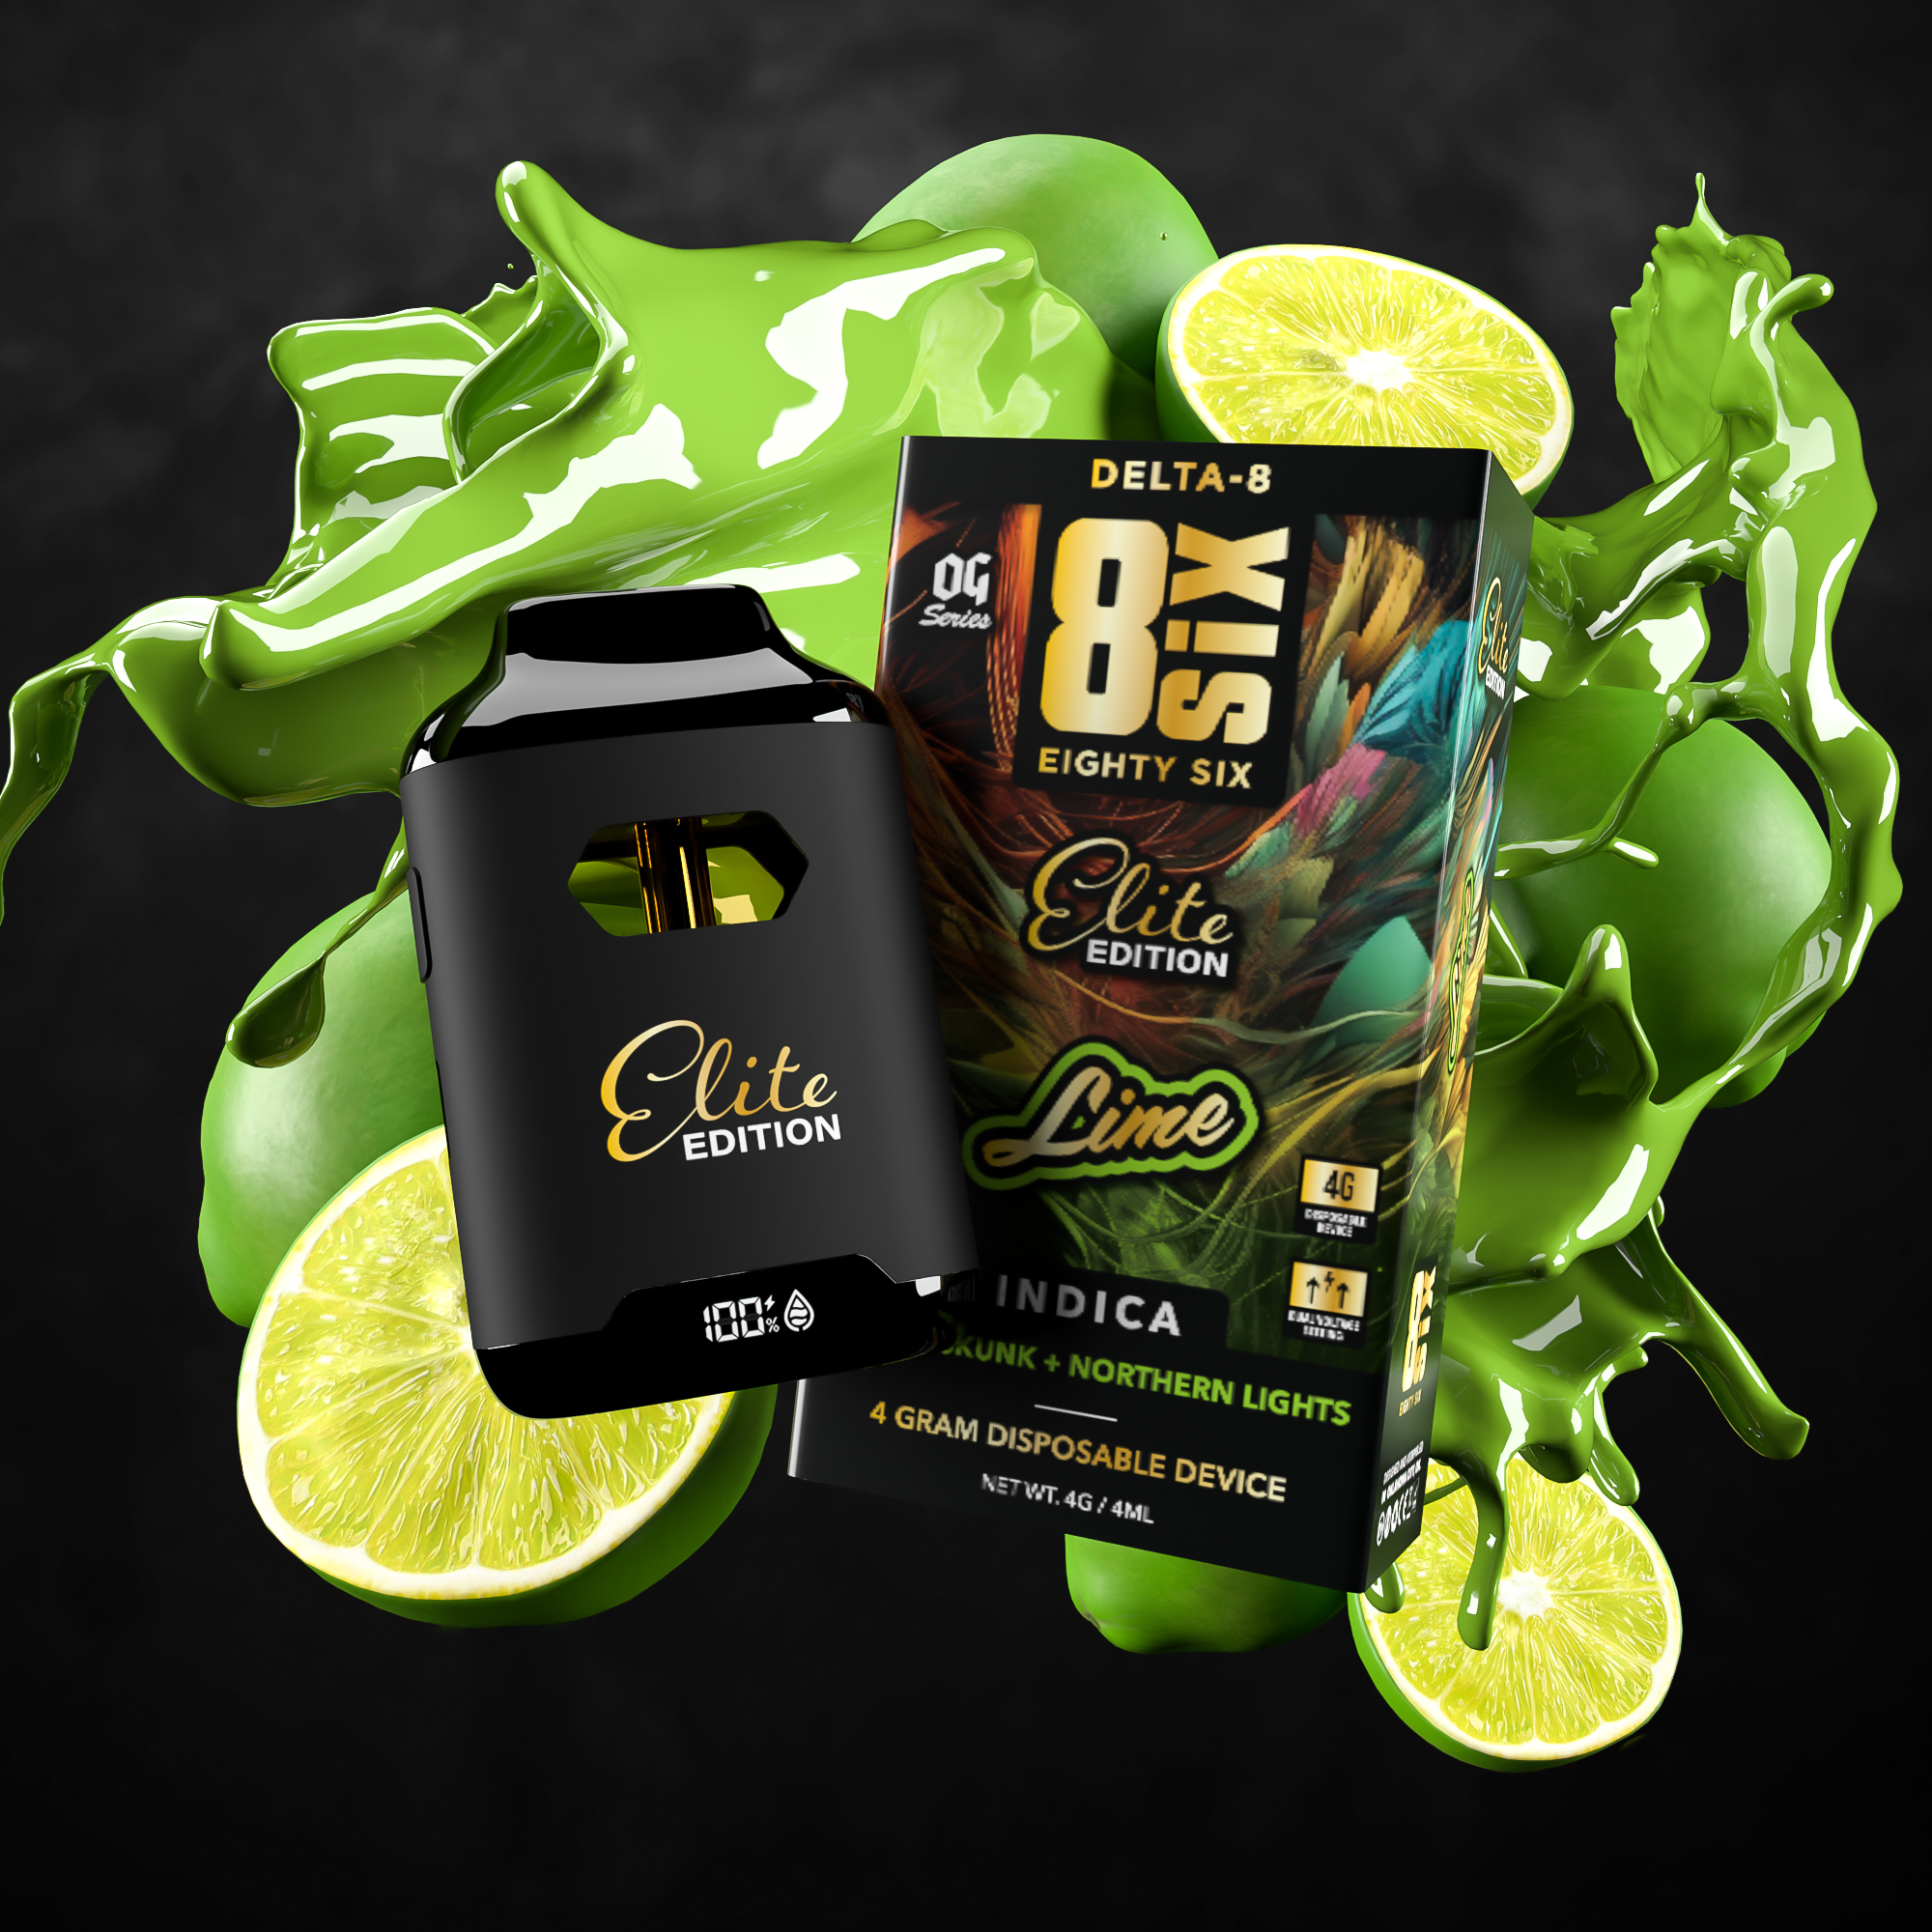 Eighty Six Lime Elite Edition Delta-8 THC 4G Disposable (Lemon Skunk) Best Price